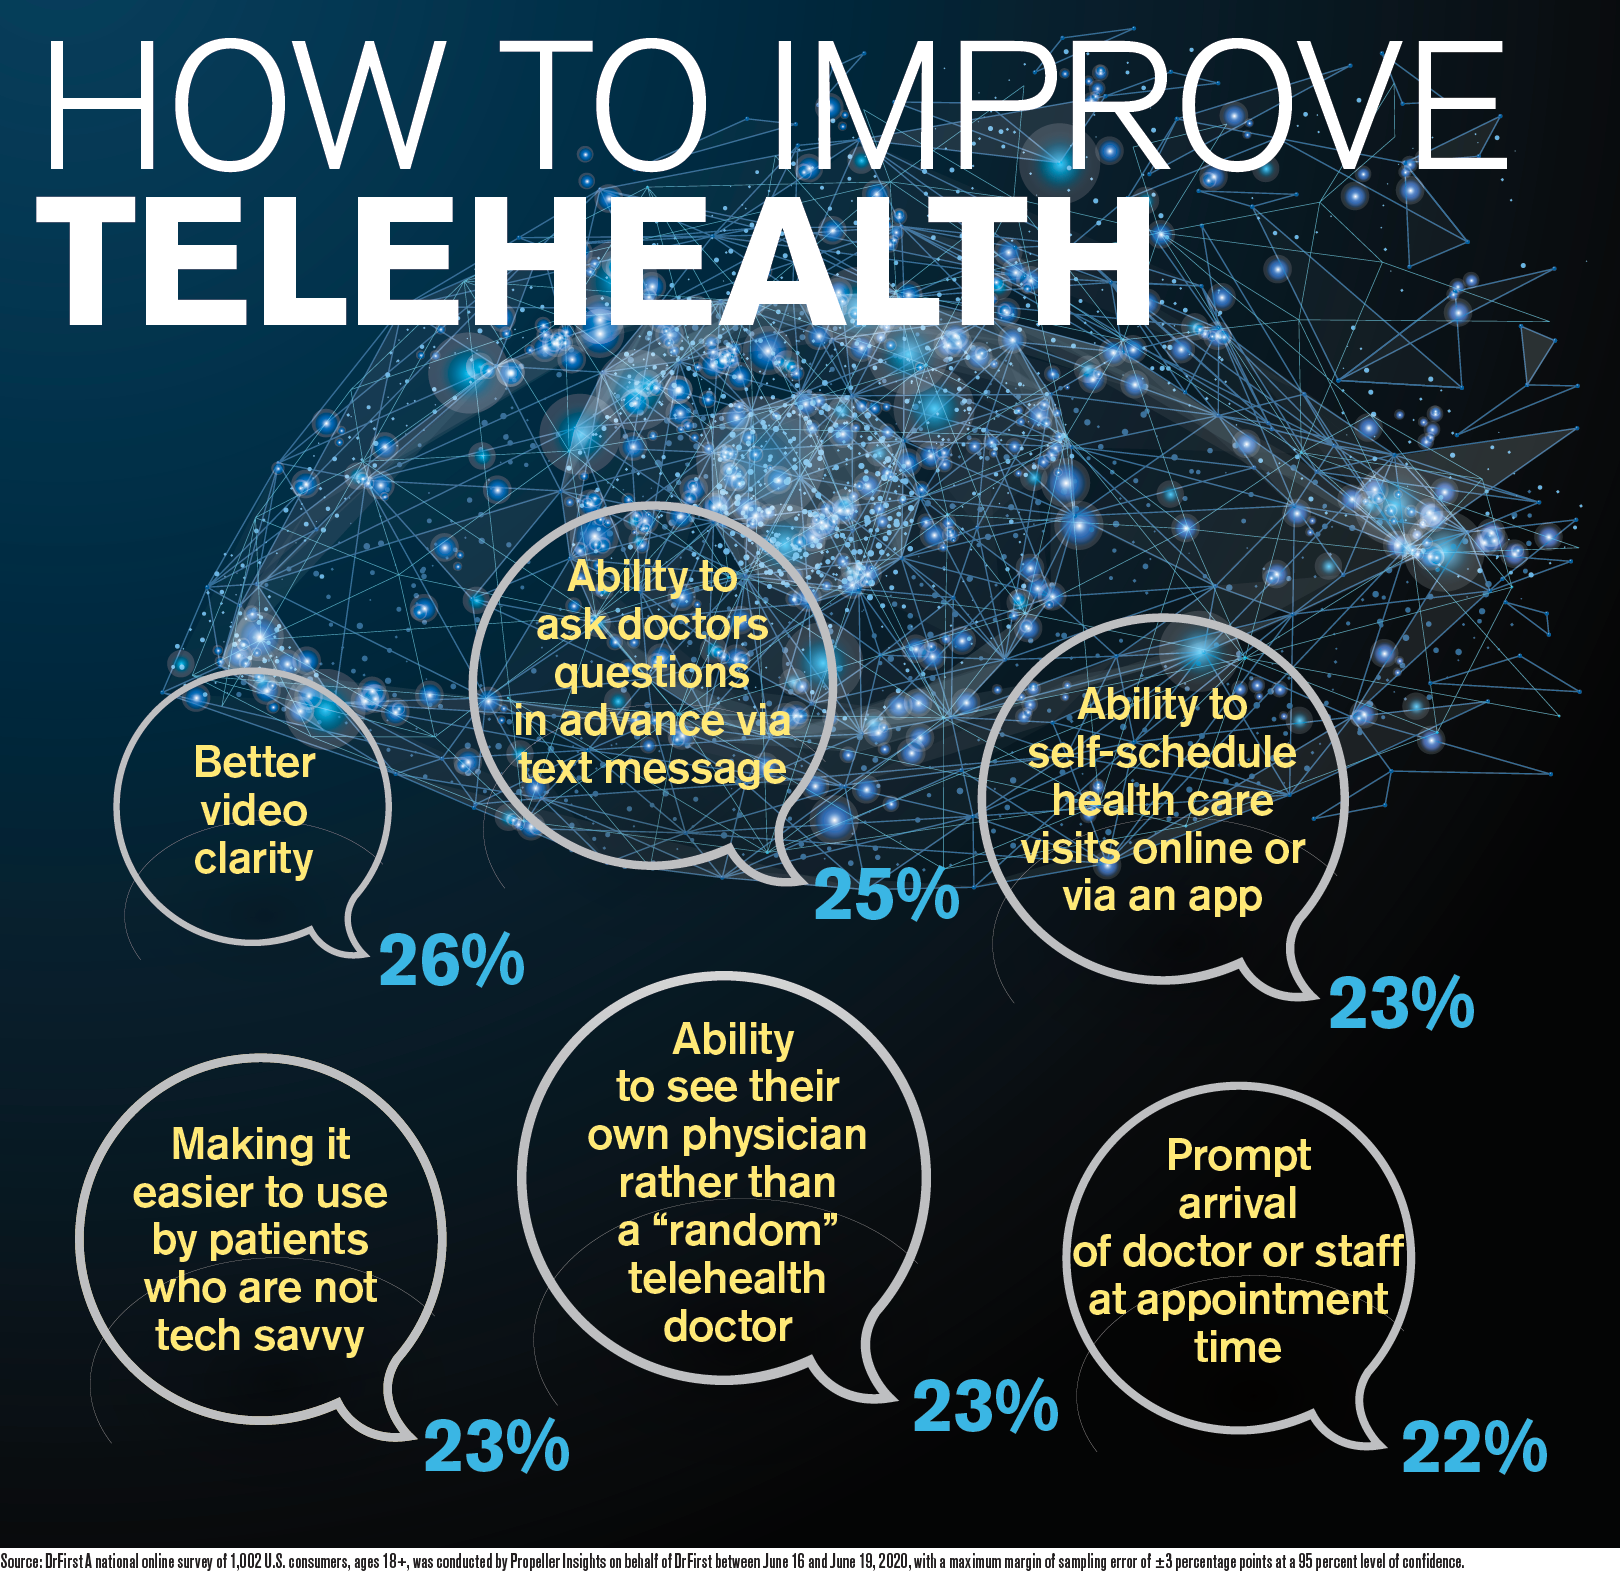 How to improve telehealth